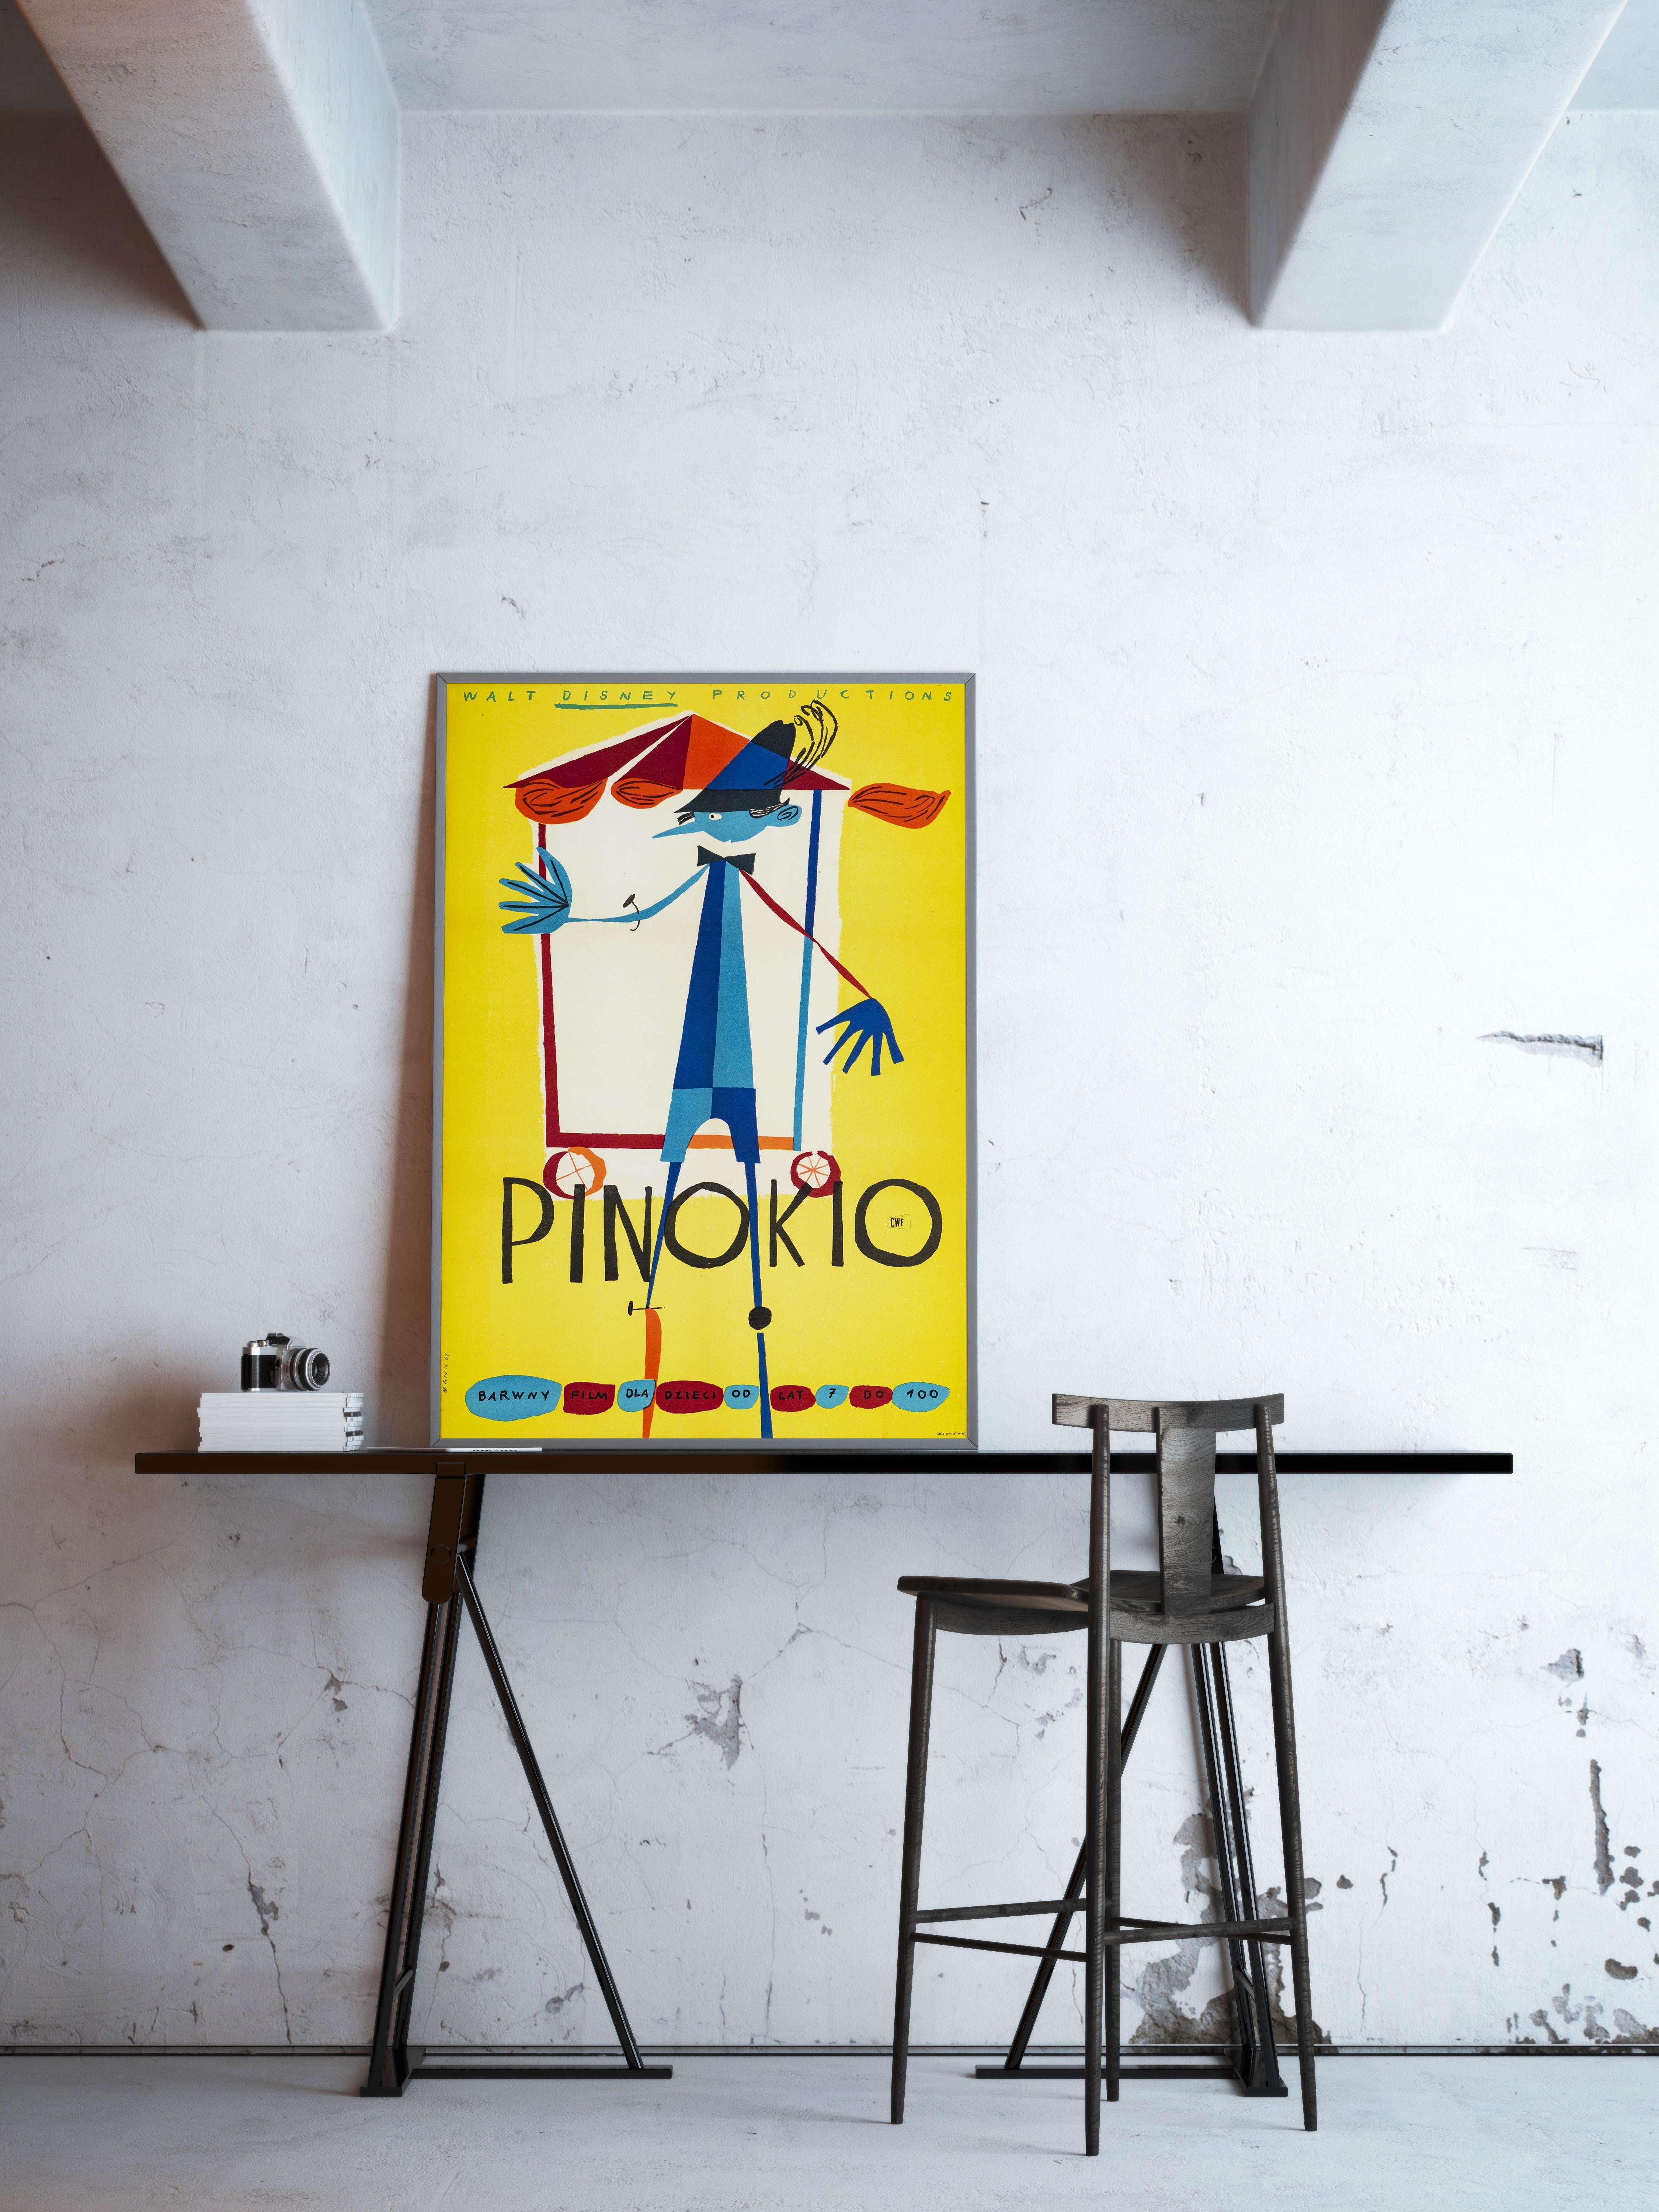 pinocchio original movie poster